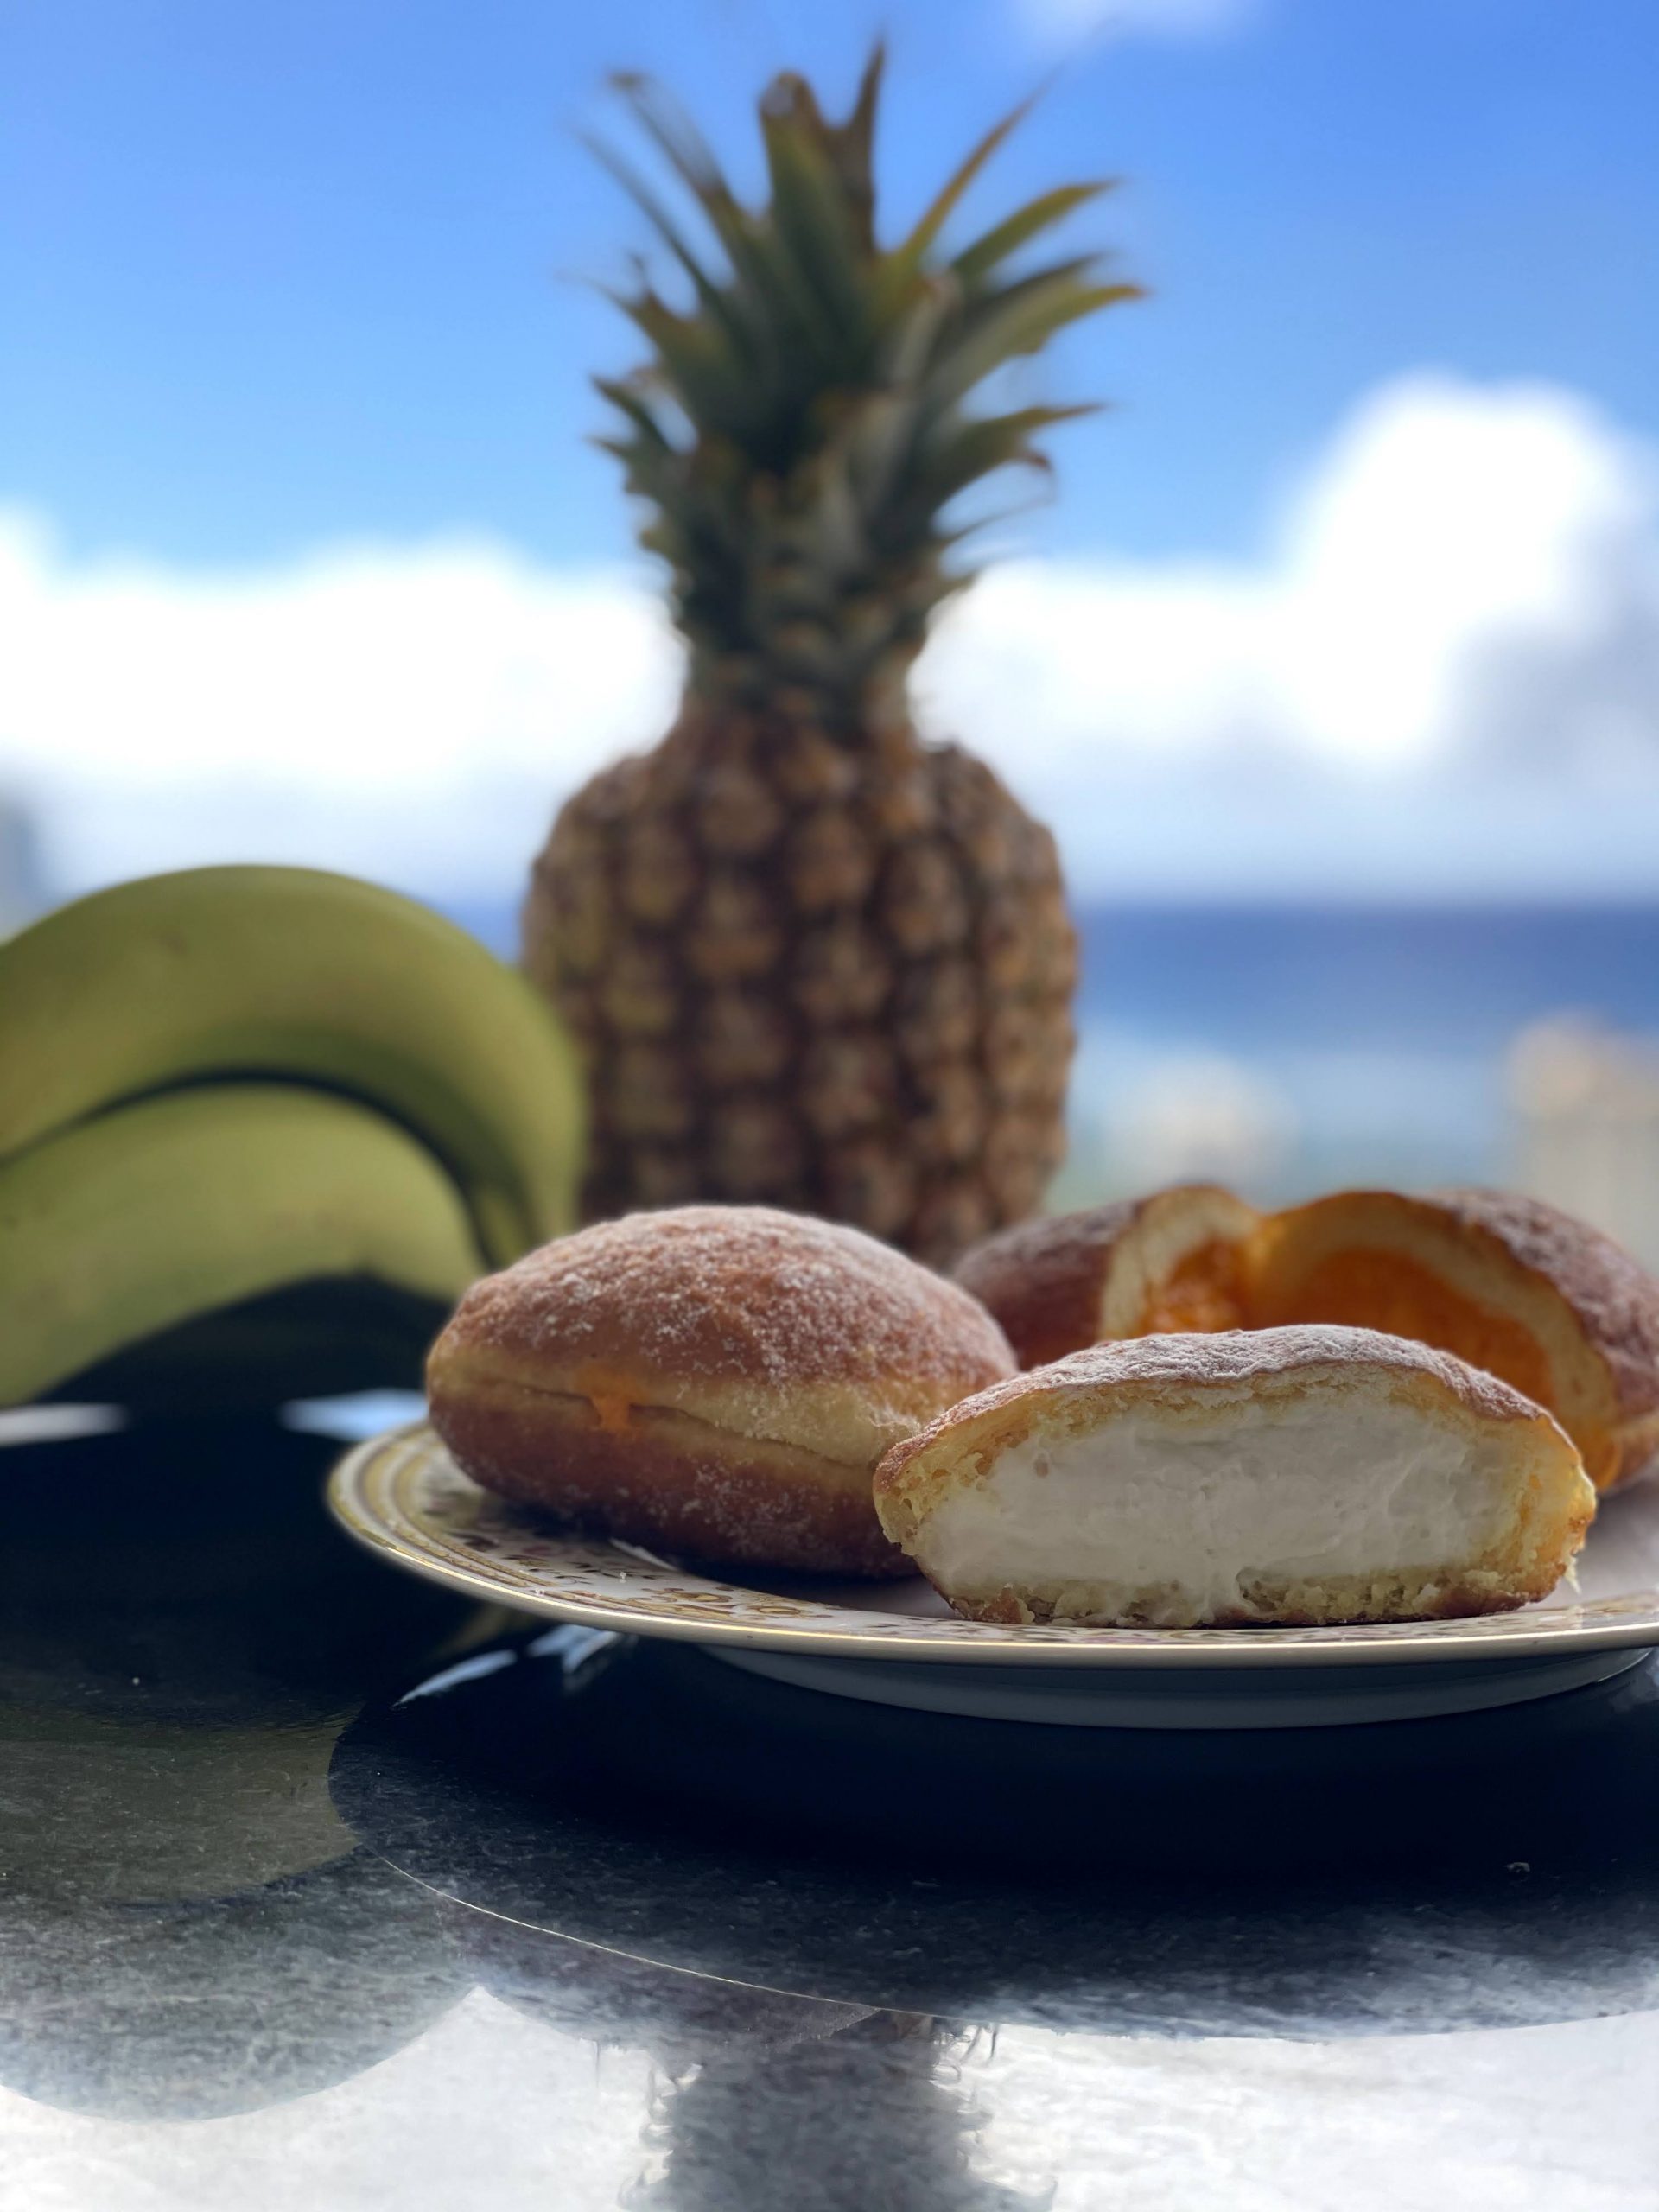 Coconut cream and lilikoi (passion fruit) malasadas